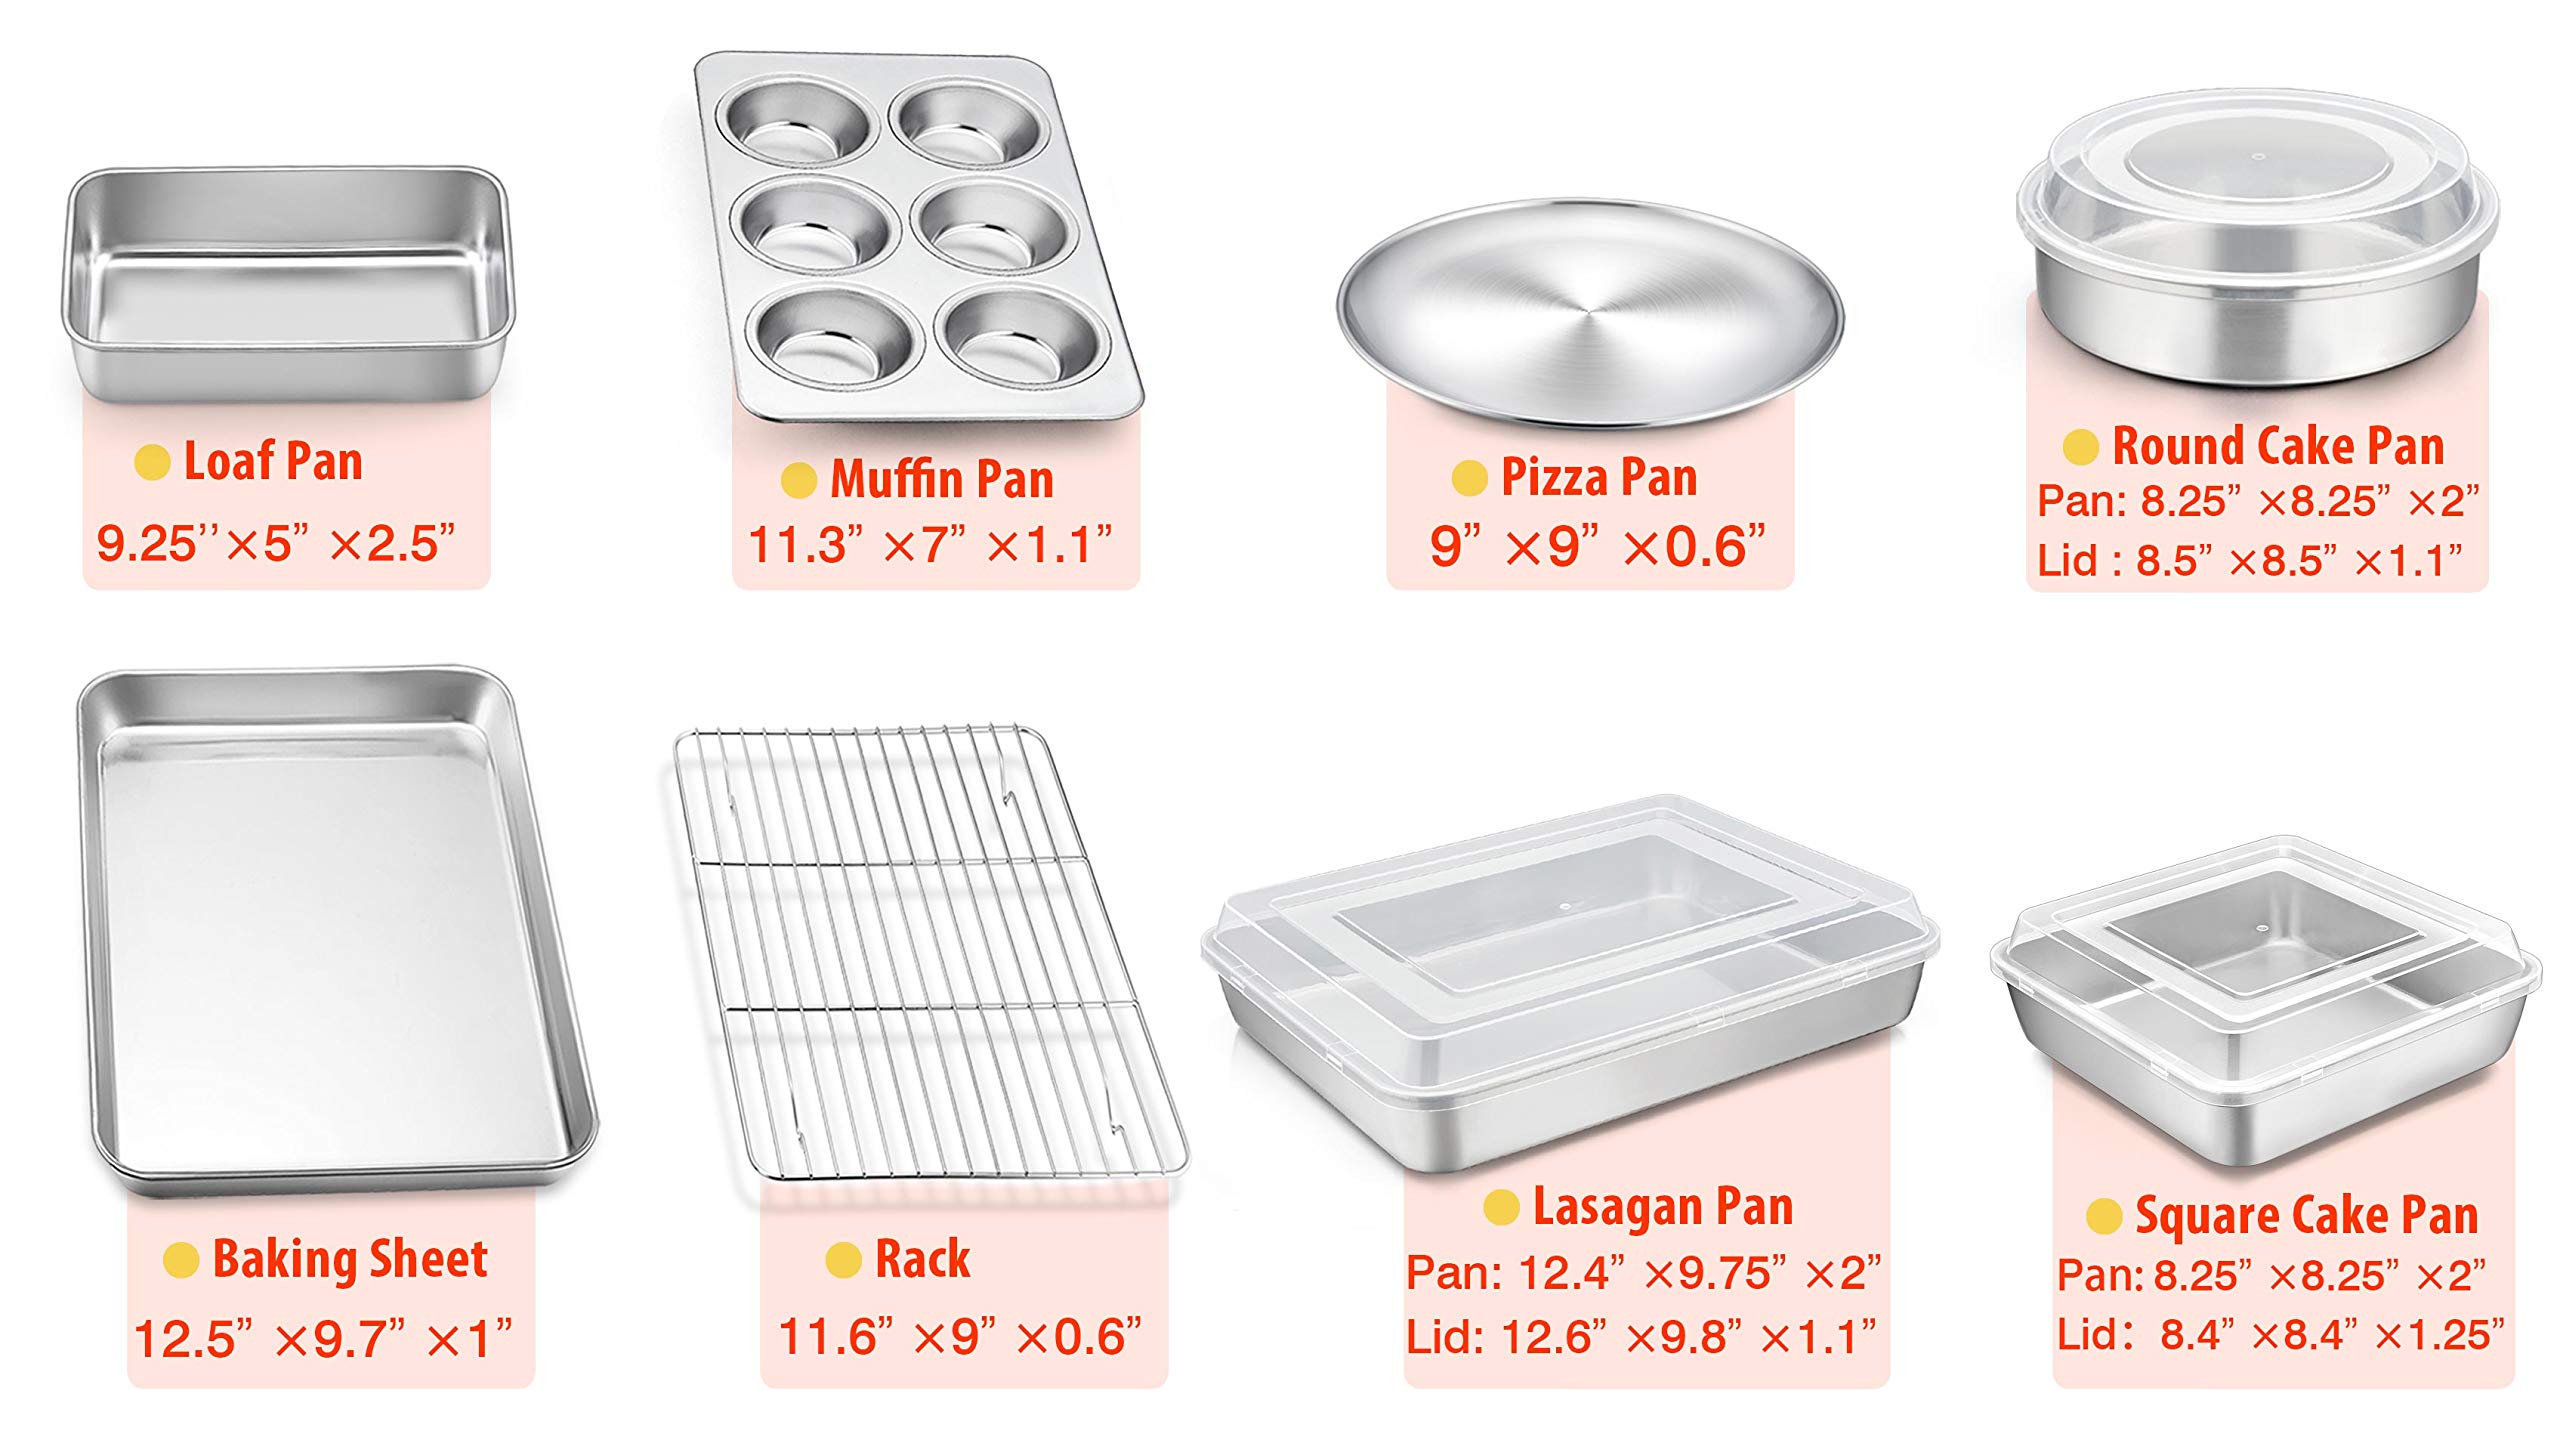 TeamFar Bakeware, Stainless Steel Bakeware Set with Baking Sheet and Rack, Lasagna Pan with Lid, Square & Round Cake Pan with Lid, Muffin Pan & Loaf Pan, Pizza Pan, Healthy & Dishwasher Safe